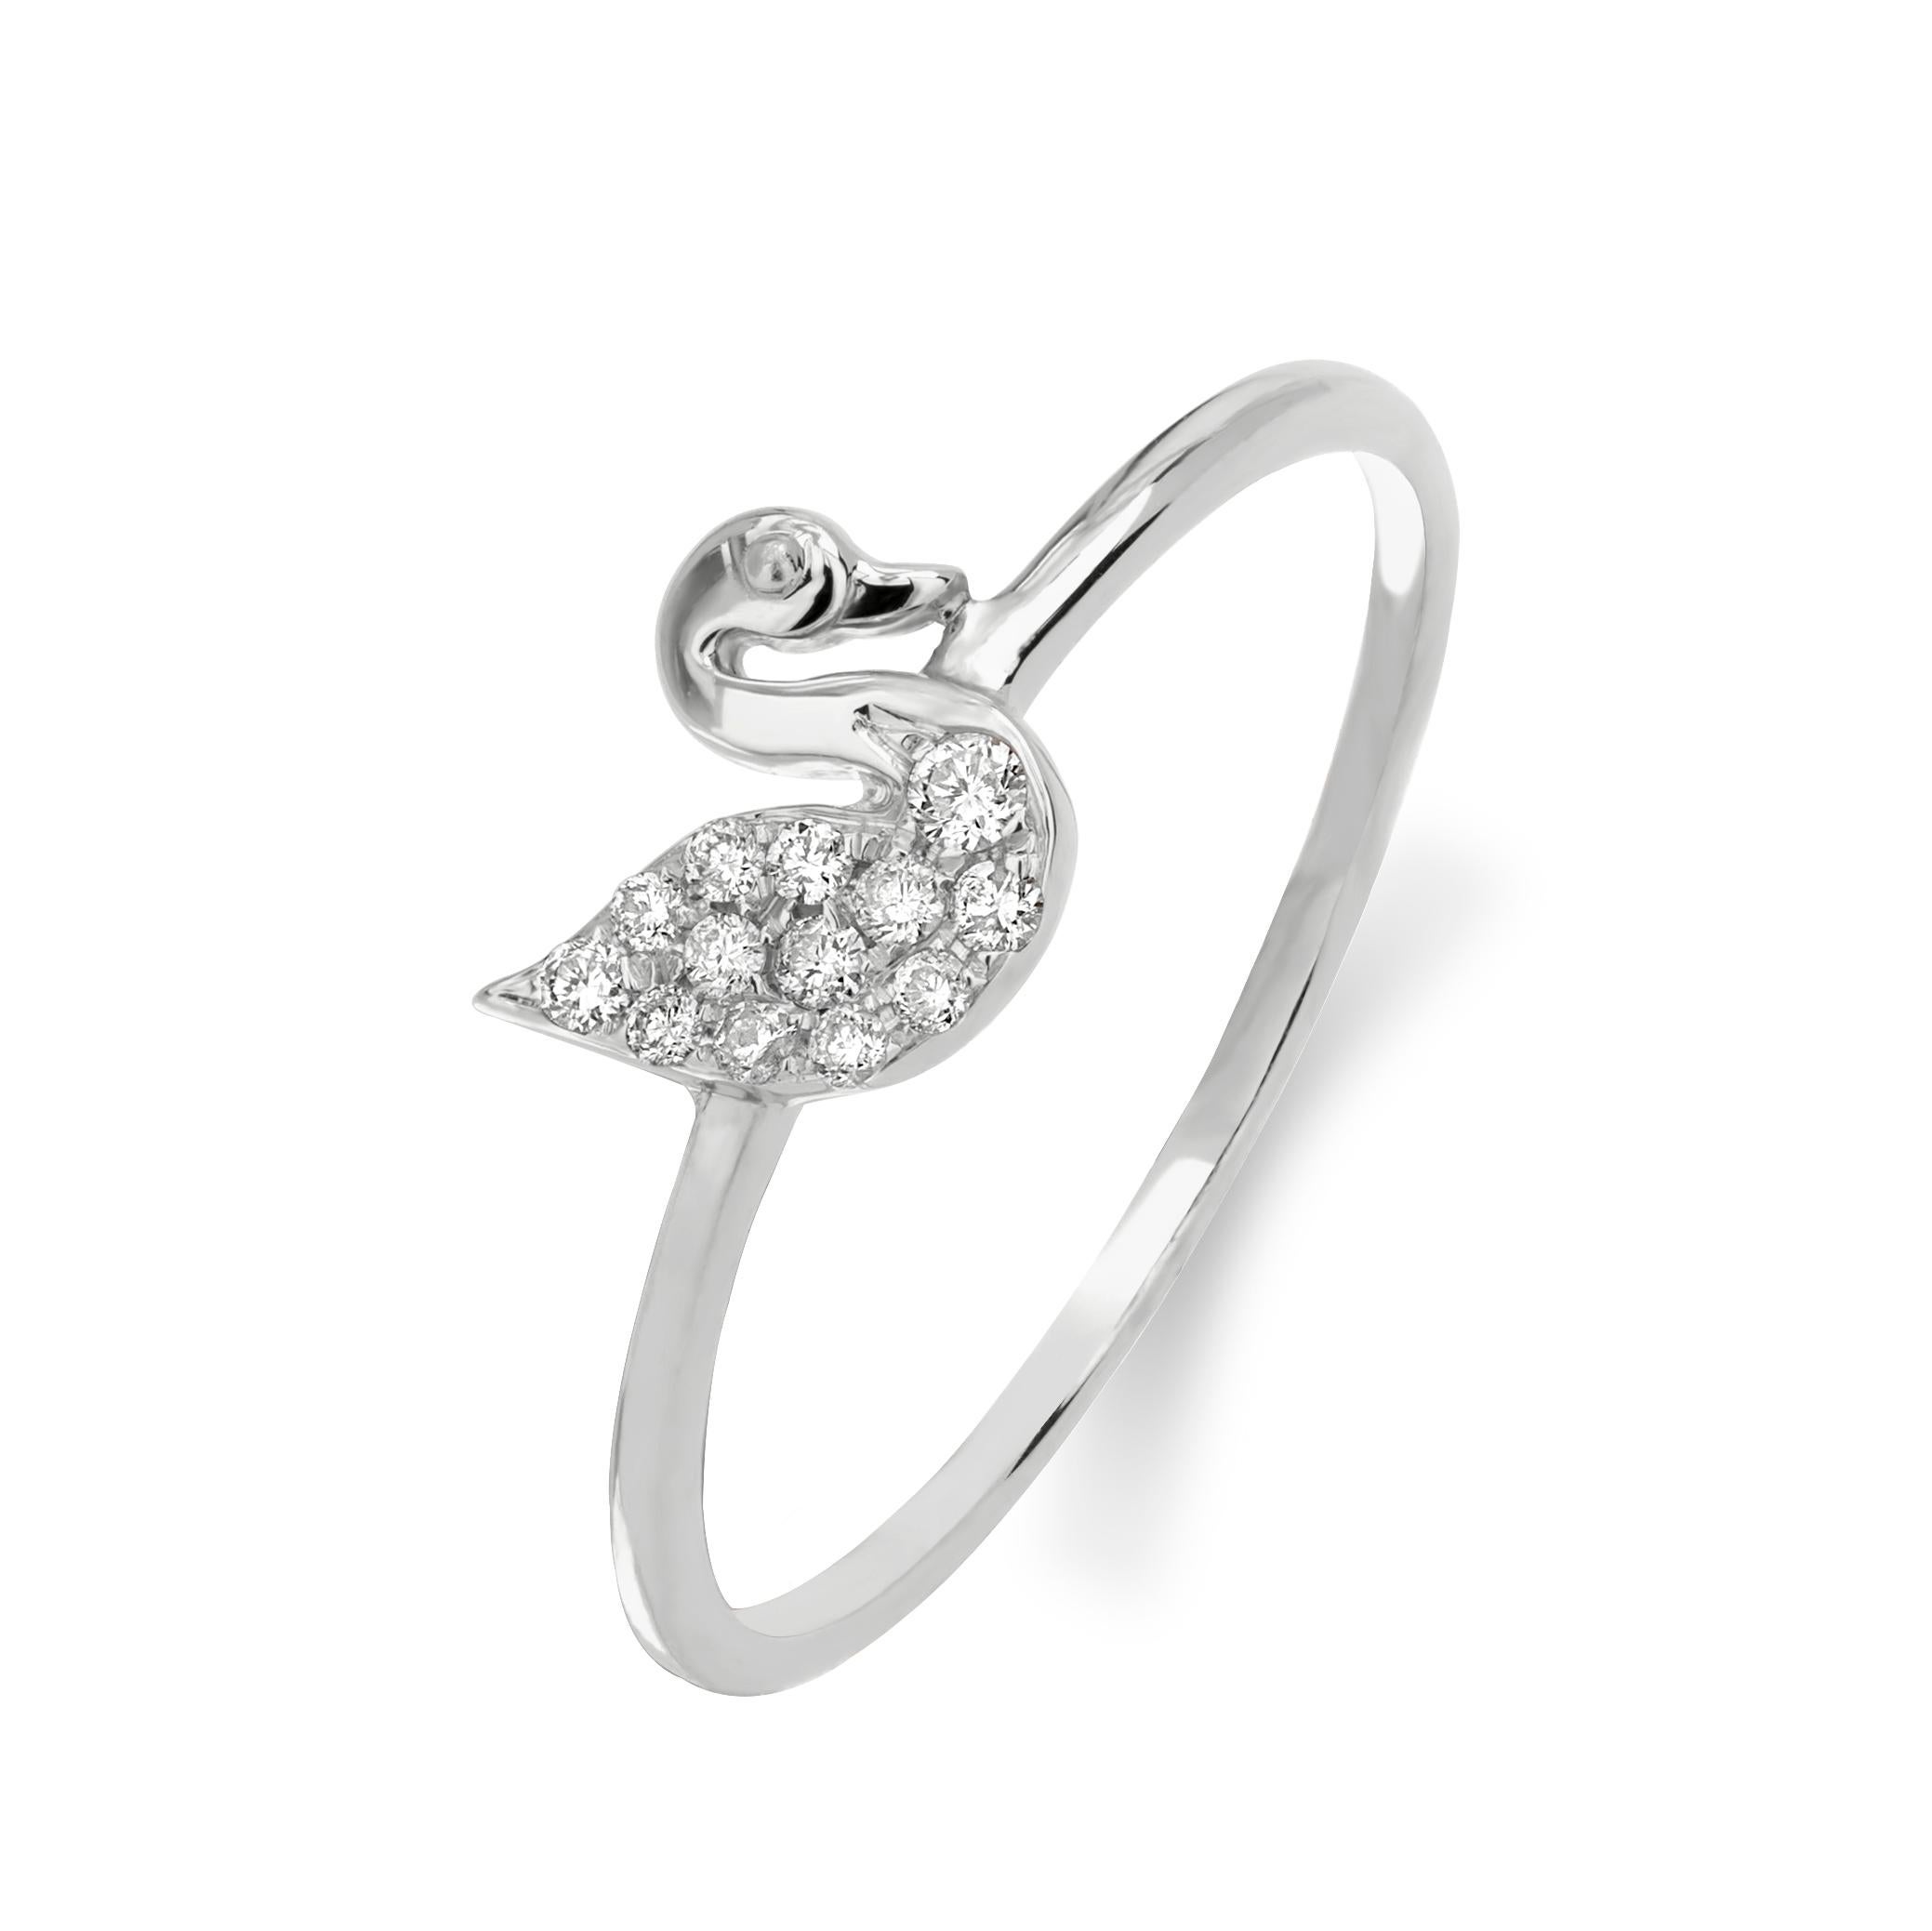 Contemporary Luxle Swan Diamond Ring in 18K White Gold